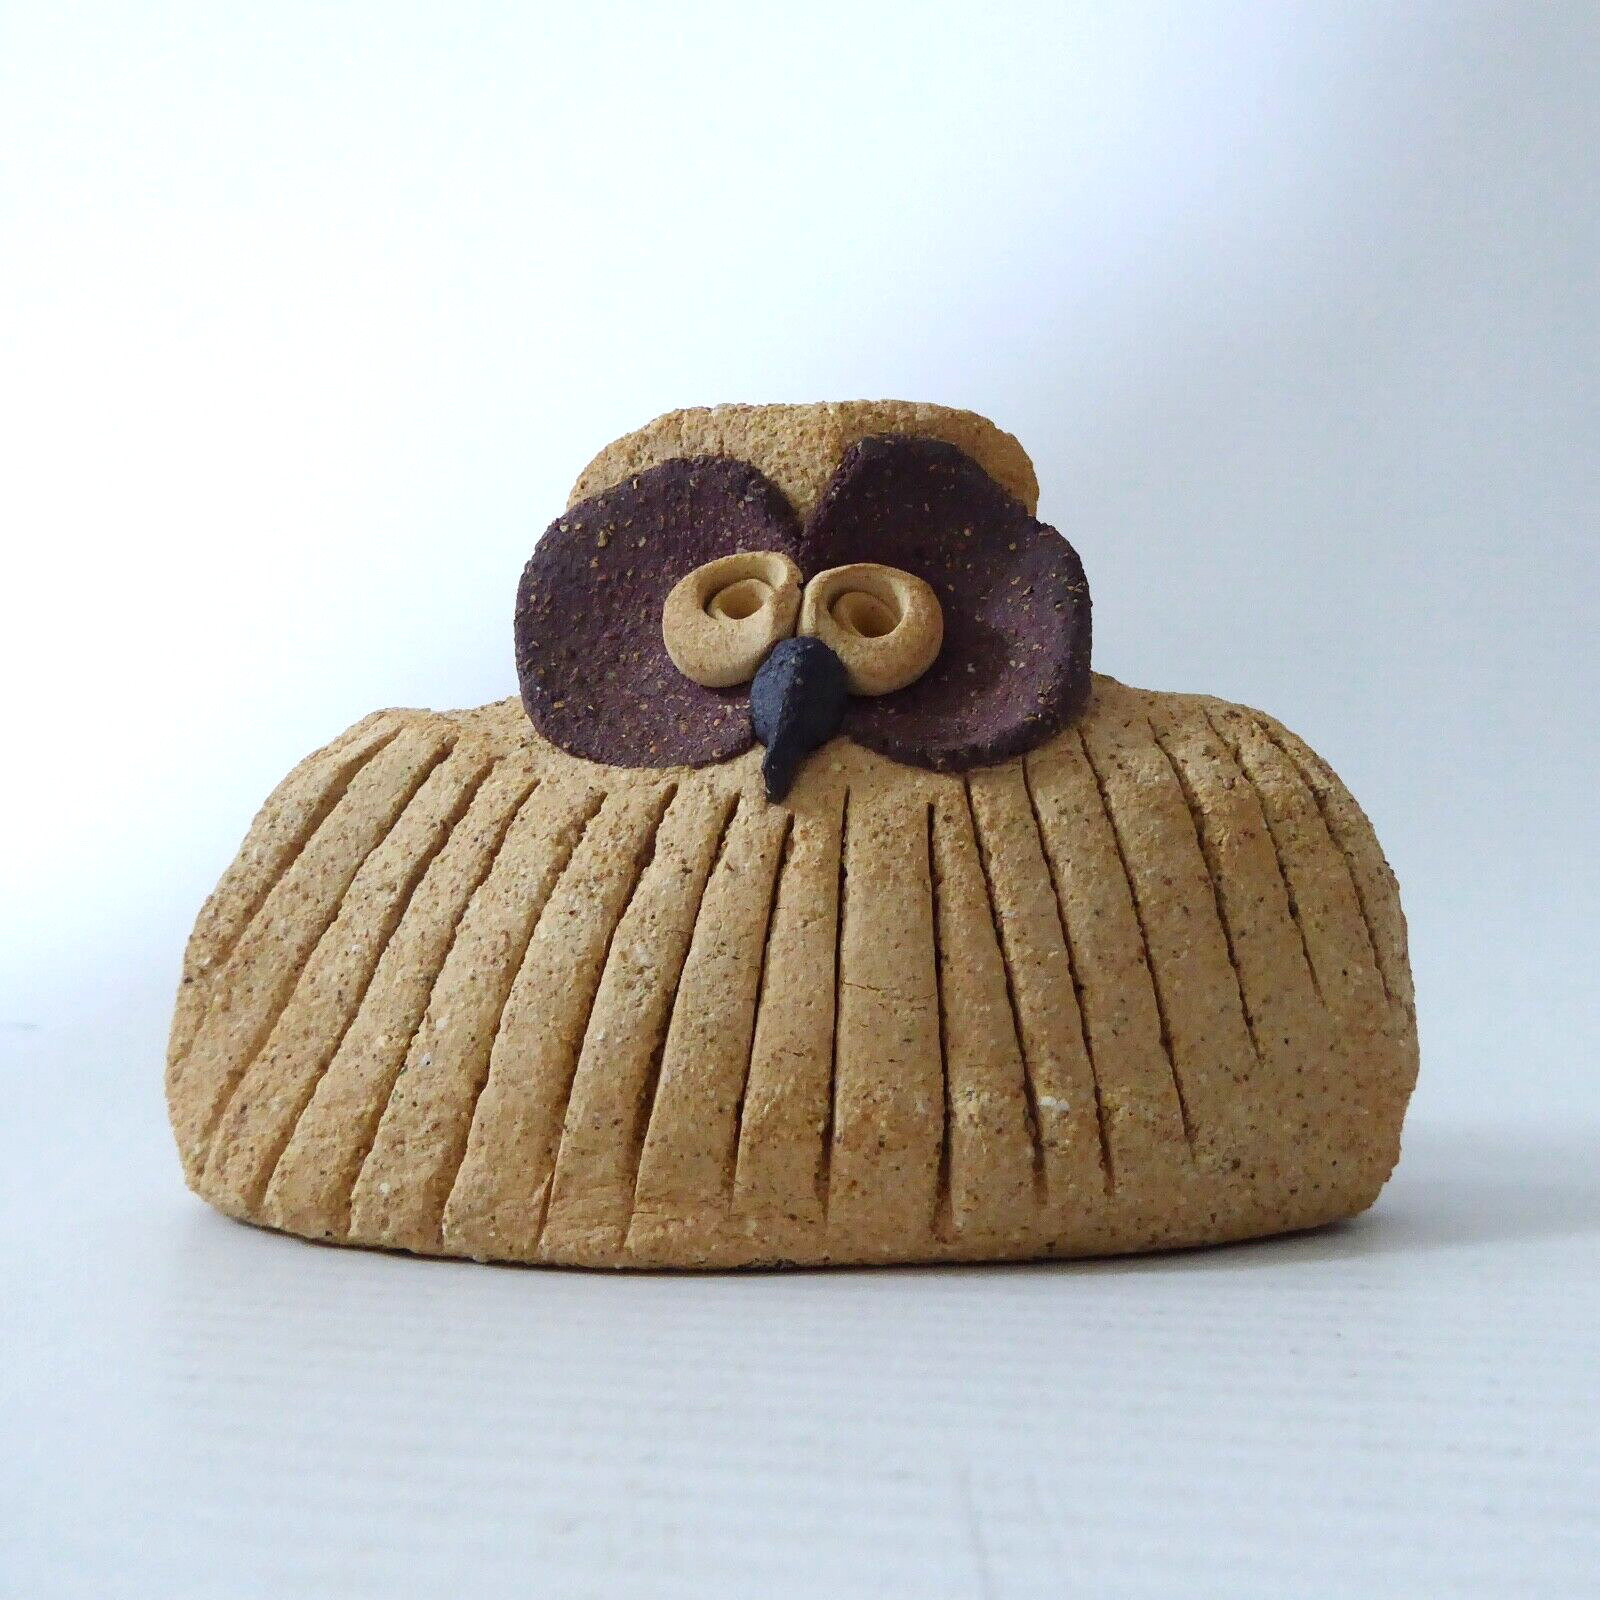 Vintage signed studio pottery owl, handmade. Fun cute quirky bird figurine, clay